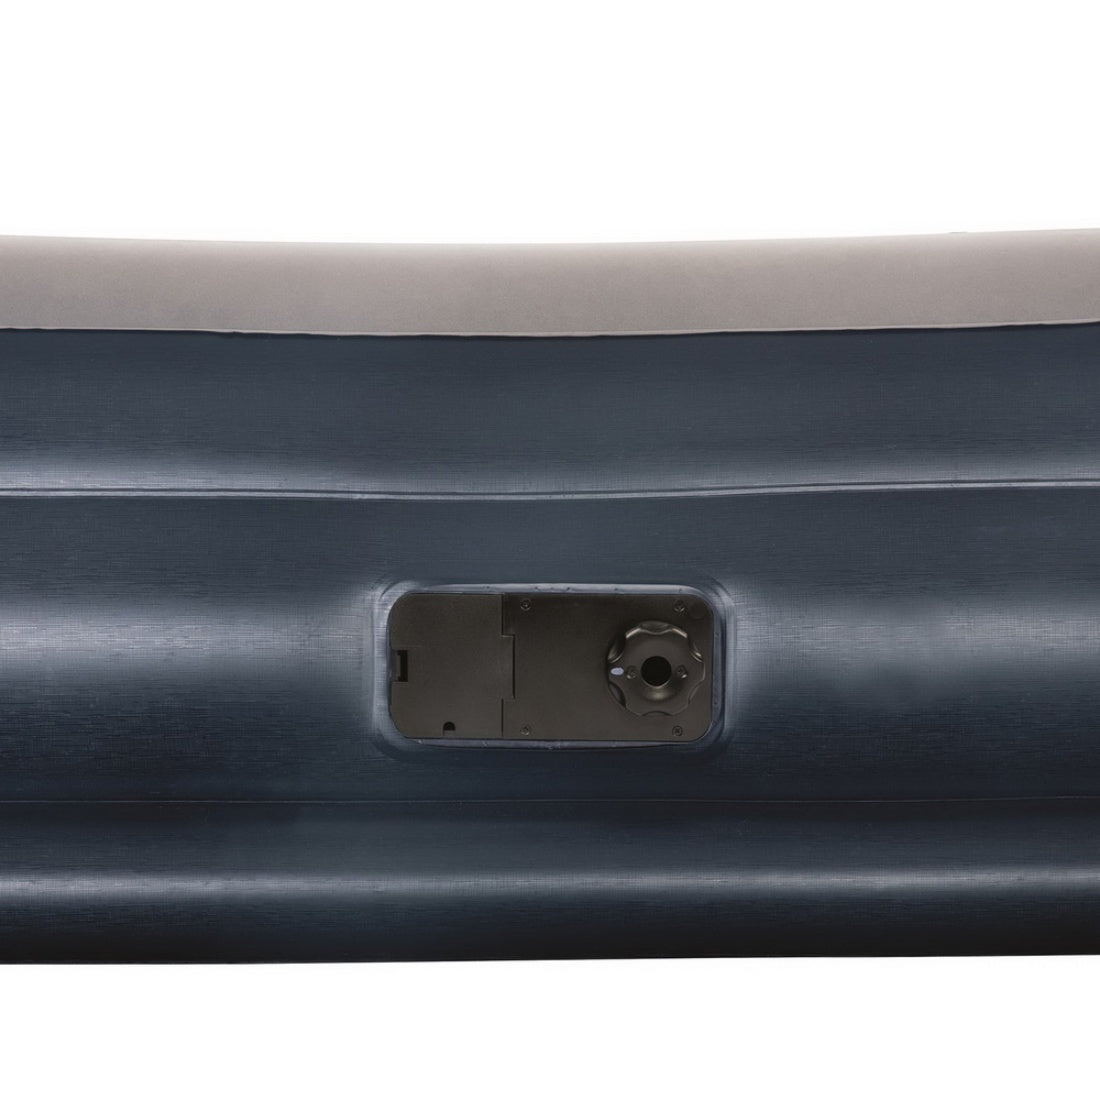 Bestway Tritech QUEEN Inflatable Airbed Mattress 46cm with Built-In AC Pump